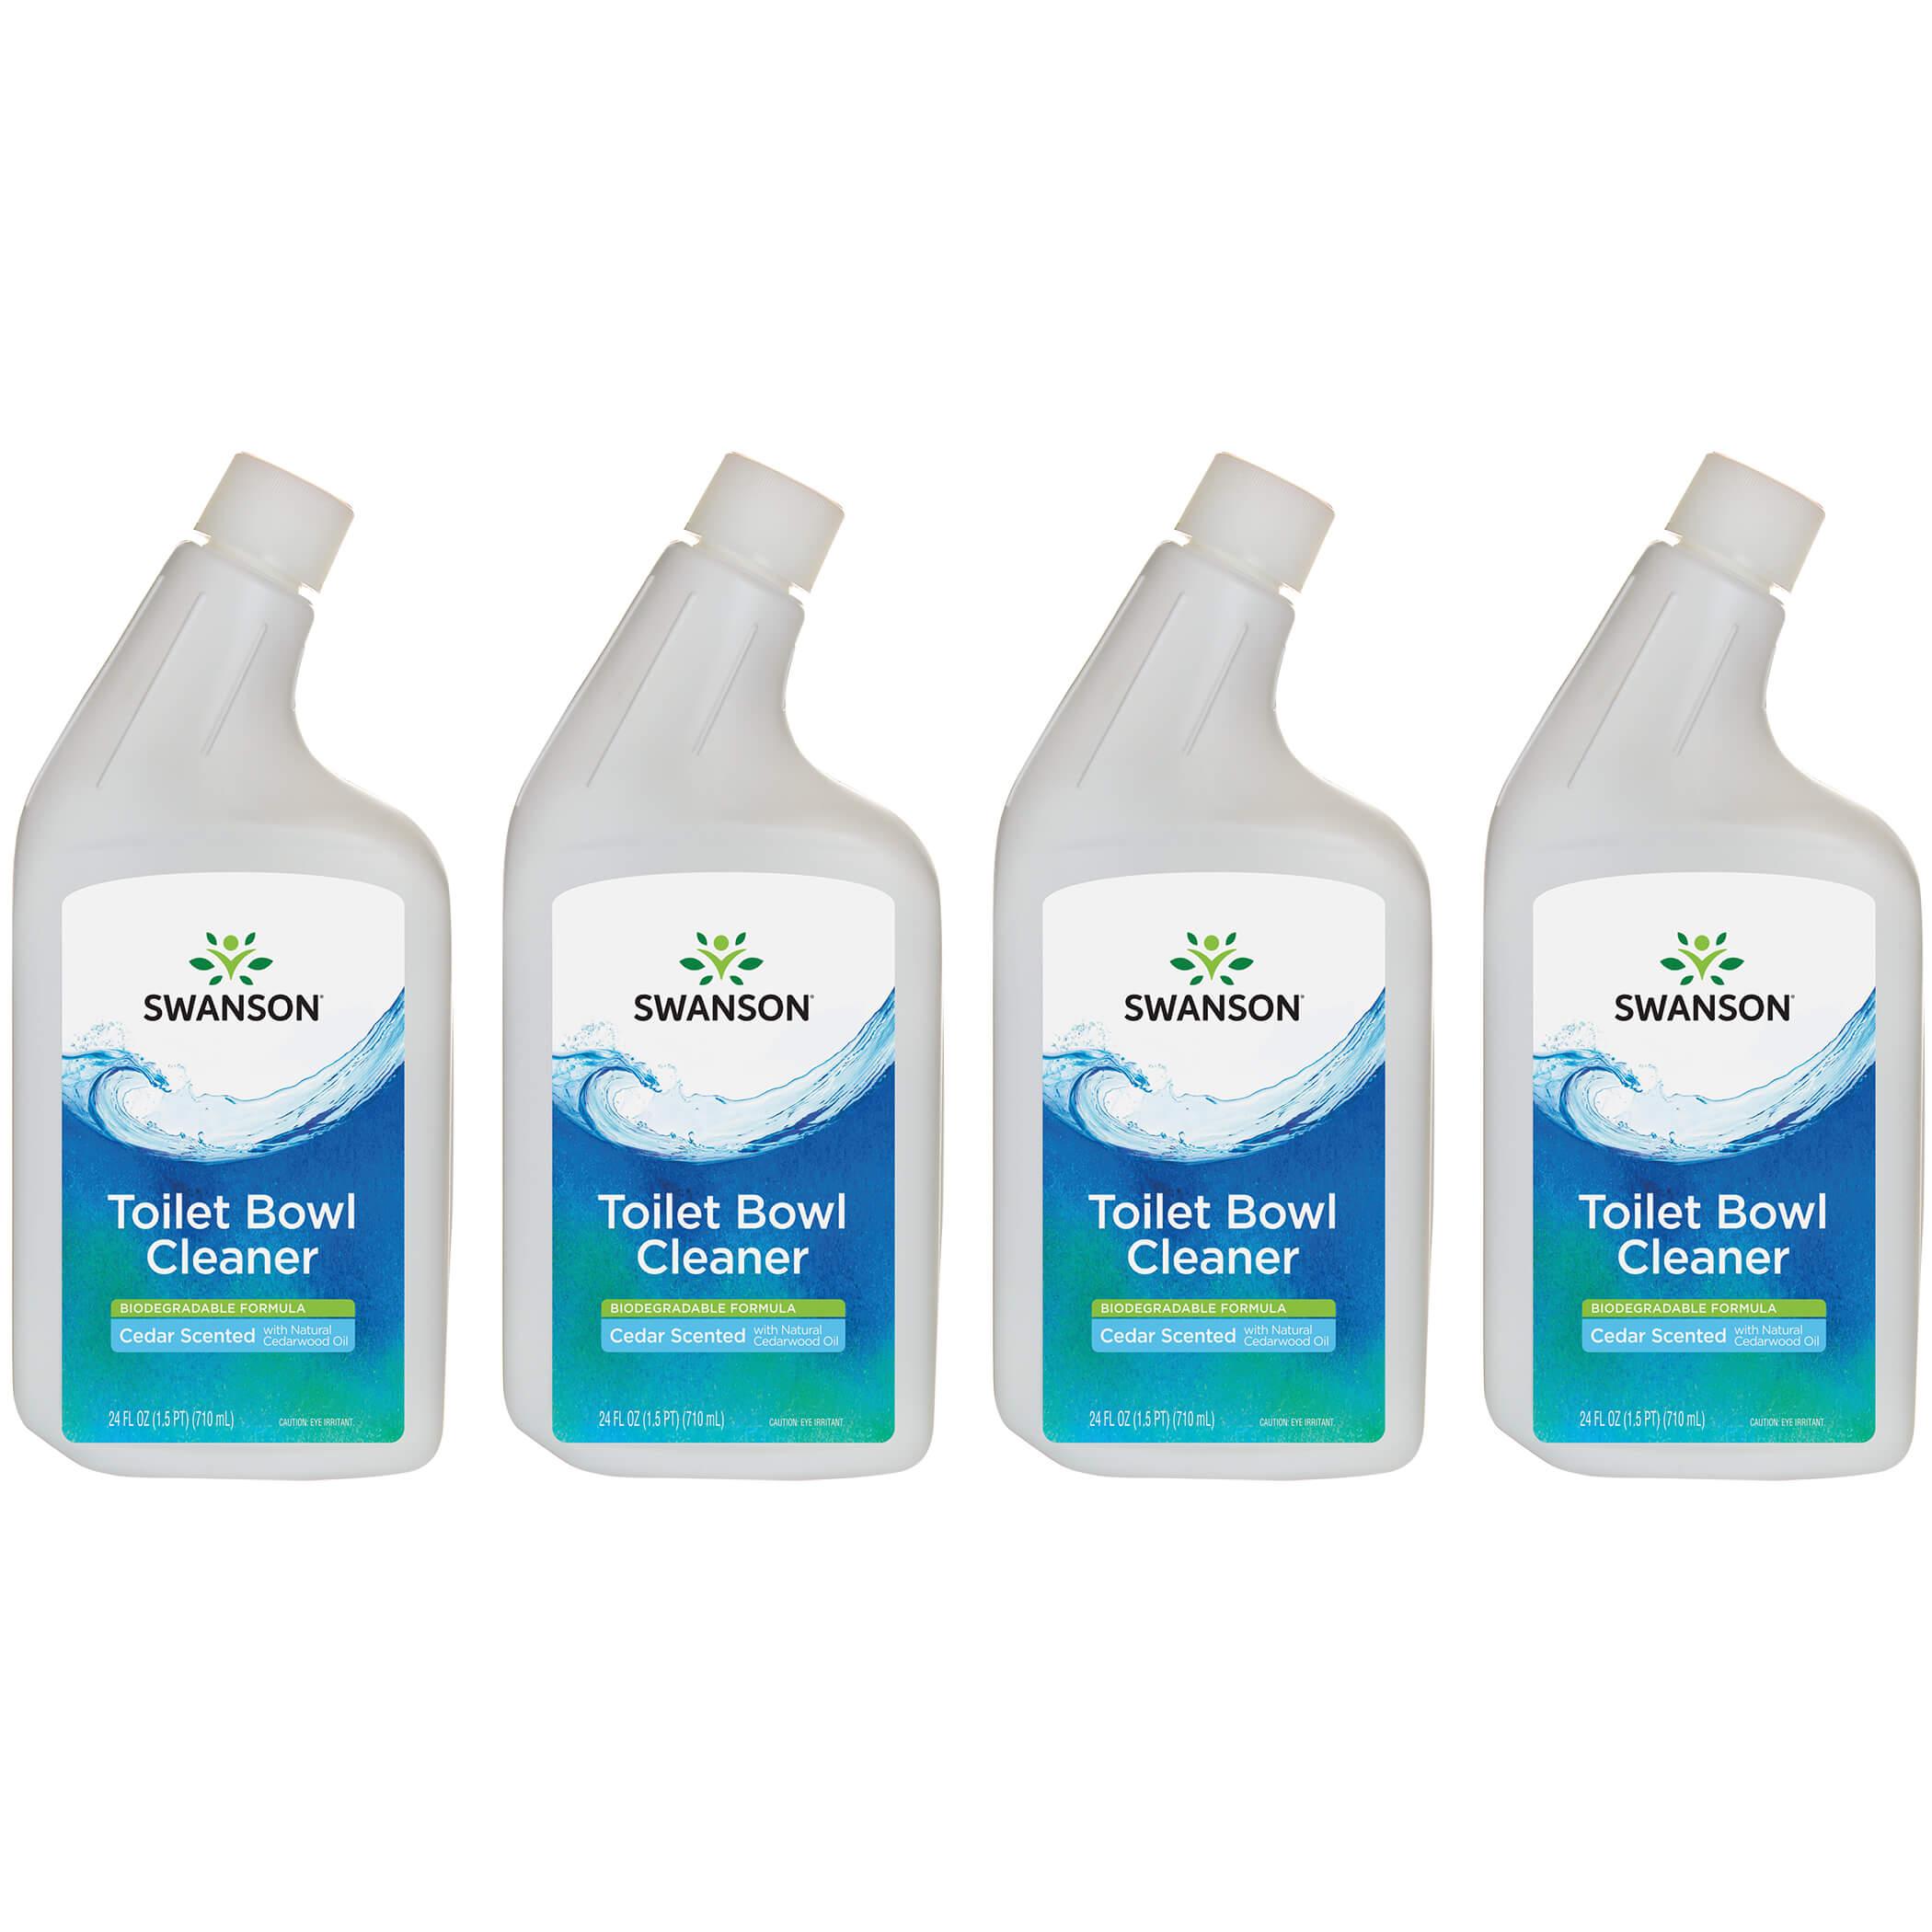 Swanson Healthy Home Toilet Bowl Cleaner - Biodegradable Formula Cedar Scented 4 Pack 24 fl oz Liquid